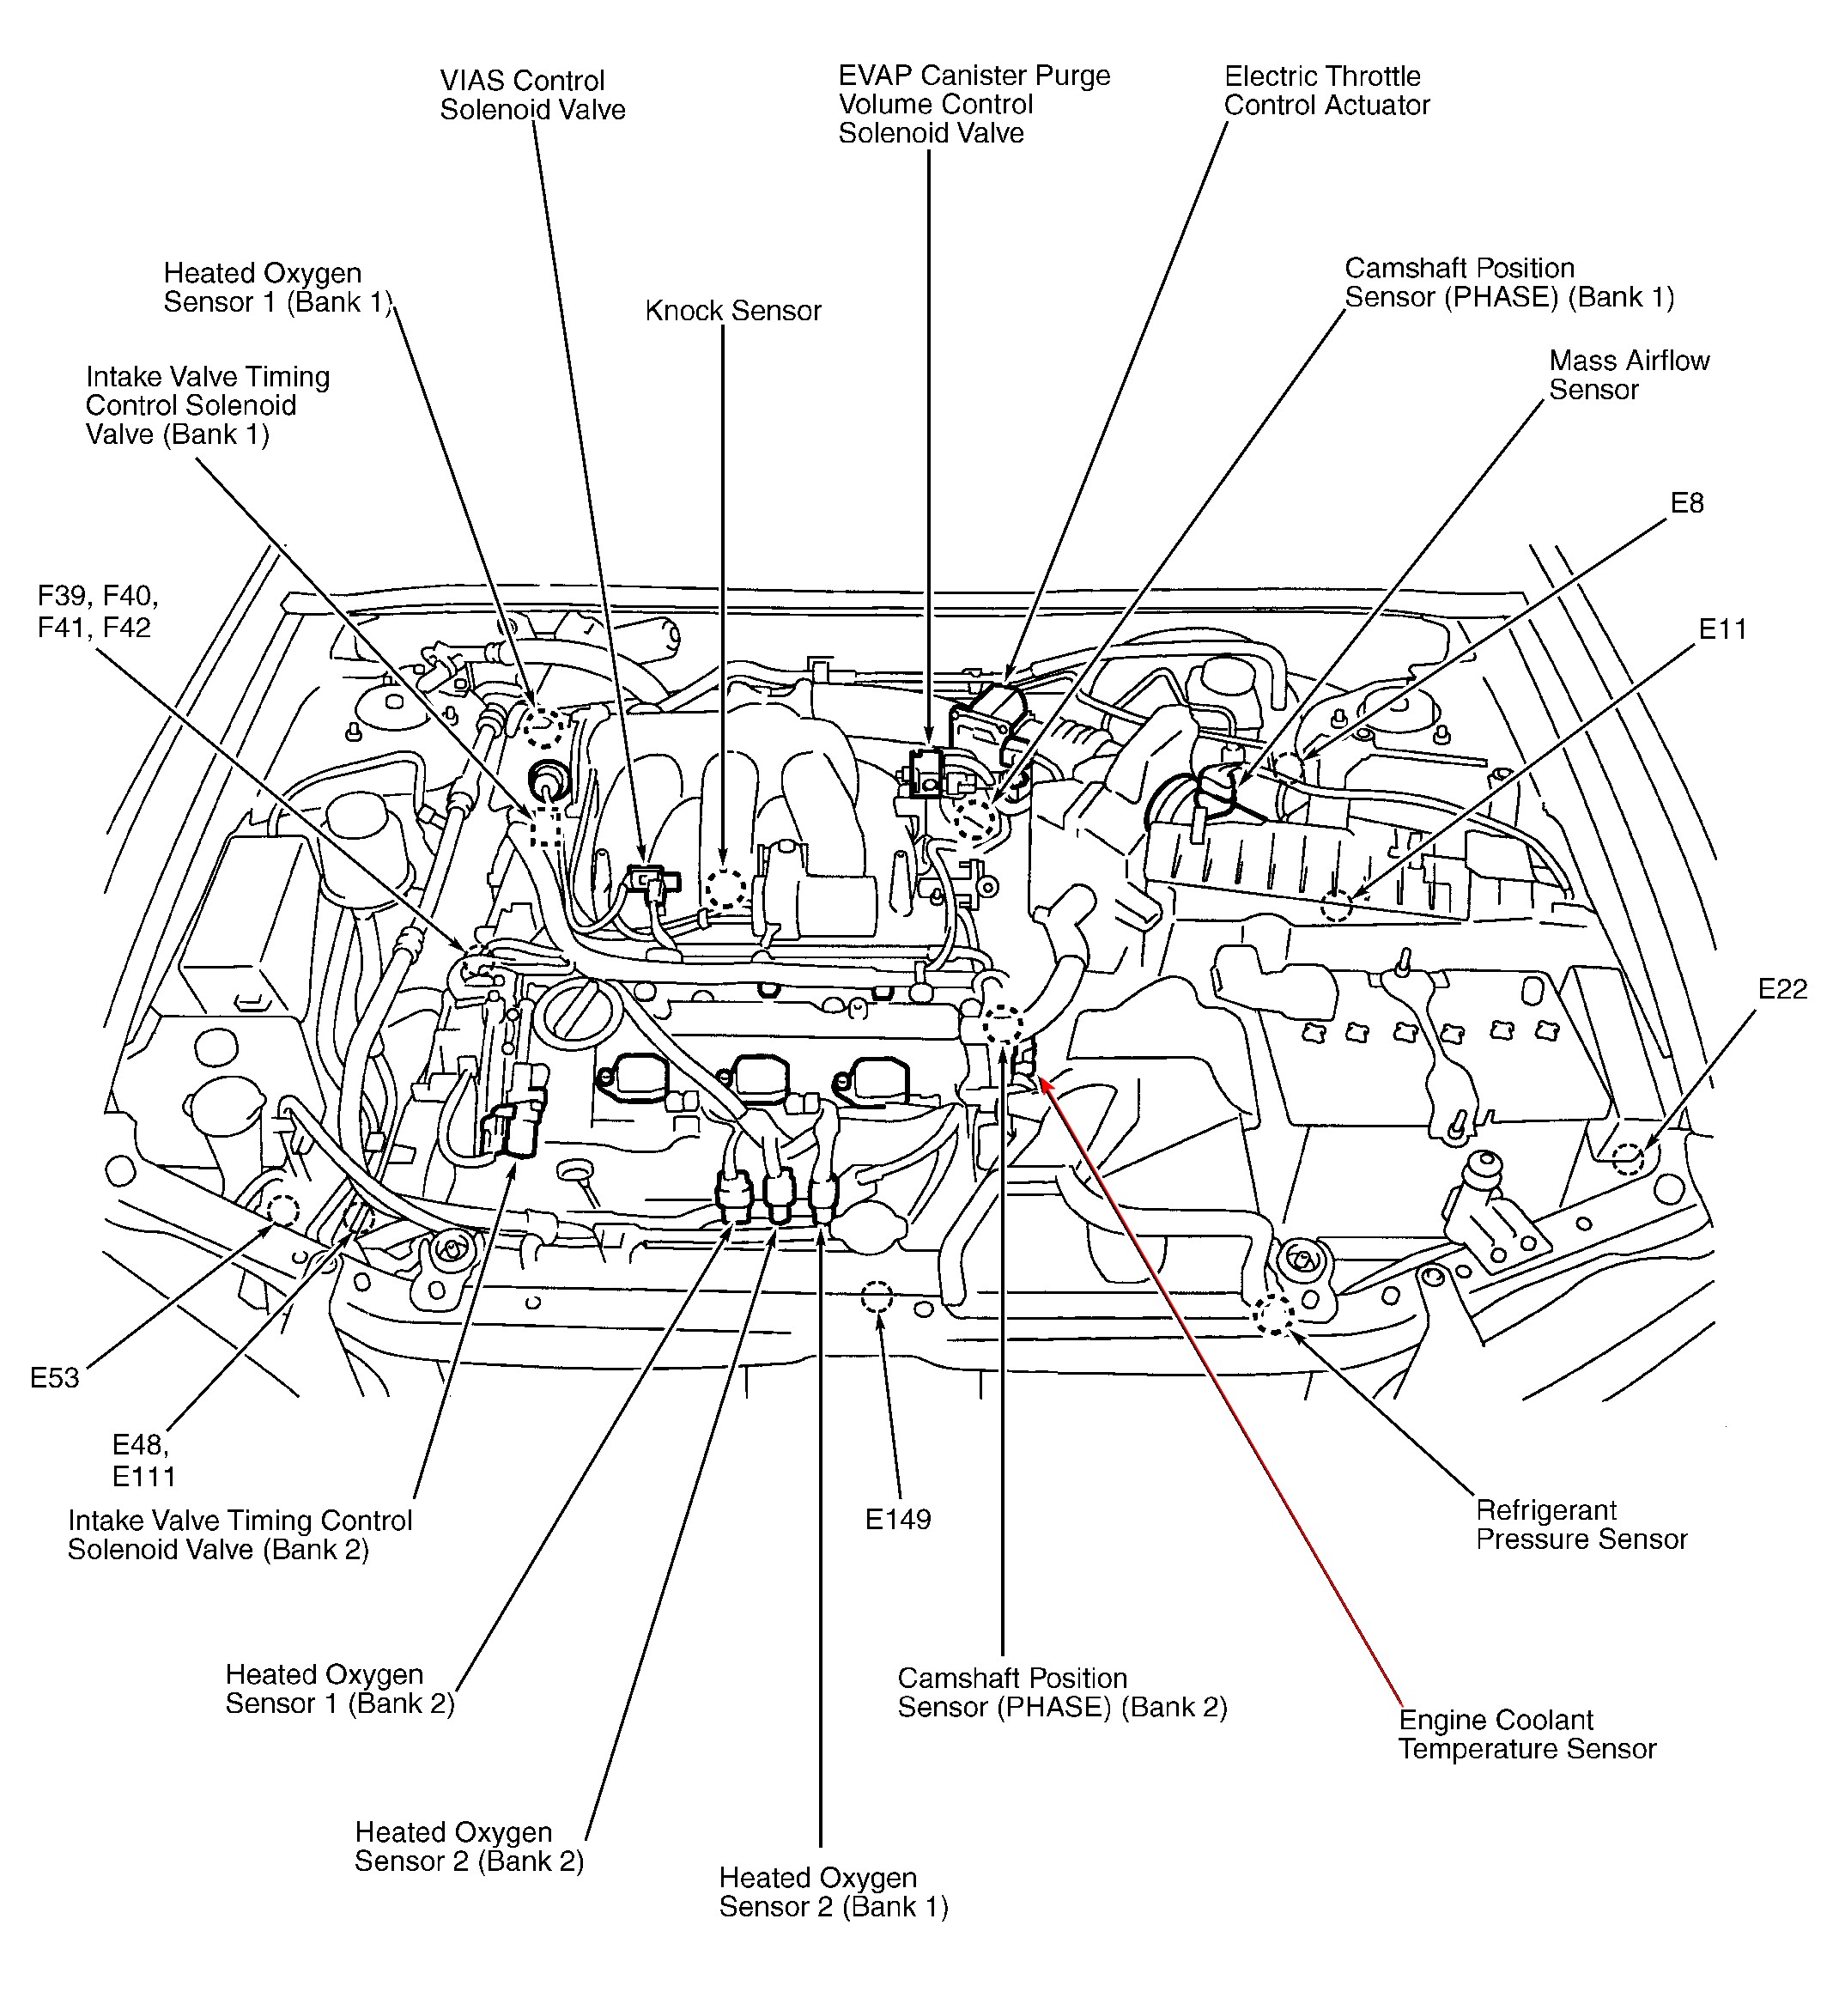 2002 Wrx Engine Diagram Likewise 2001 Nissan Pathfinder Wiring Diagram as Well 1996 Nissan Of 2002 Wrx Engine Diagram